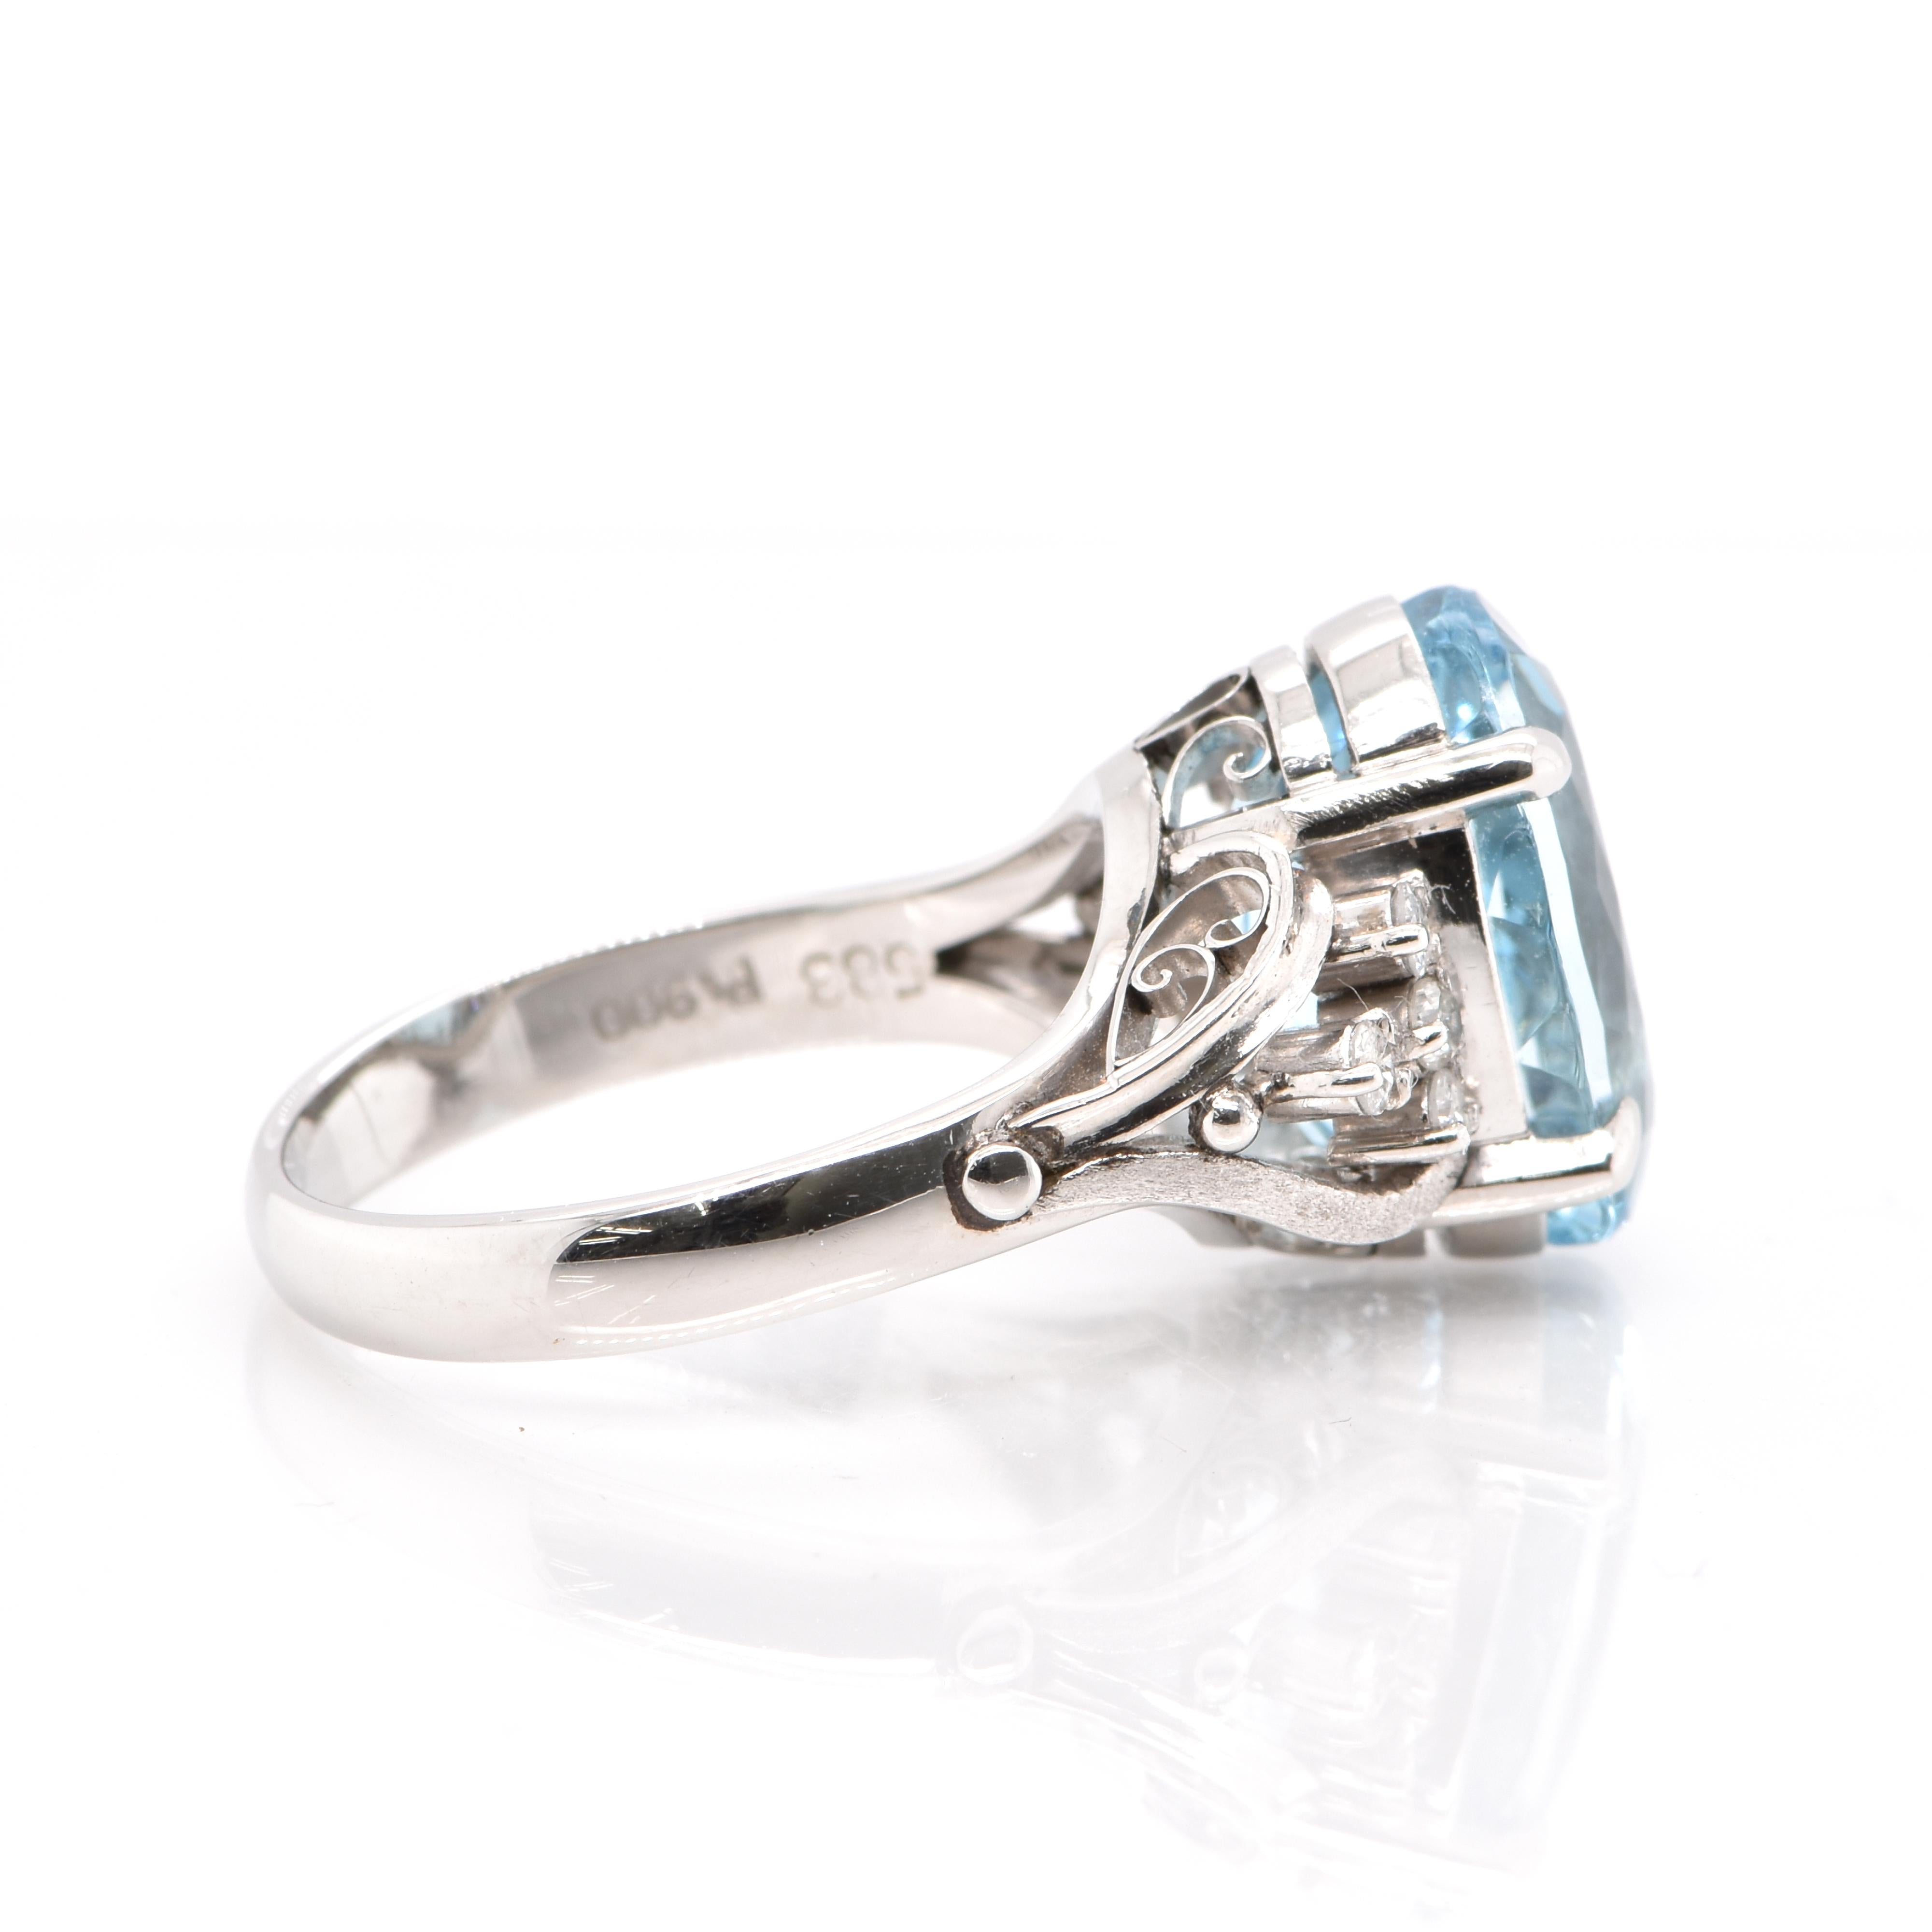 Modern 5.83 Carat, Santa-Maria Aquamarine and Diamond Cocktail Ring Set in Platinum